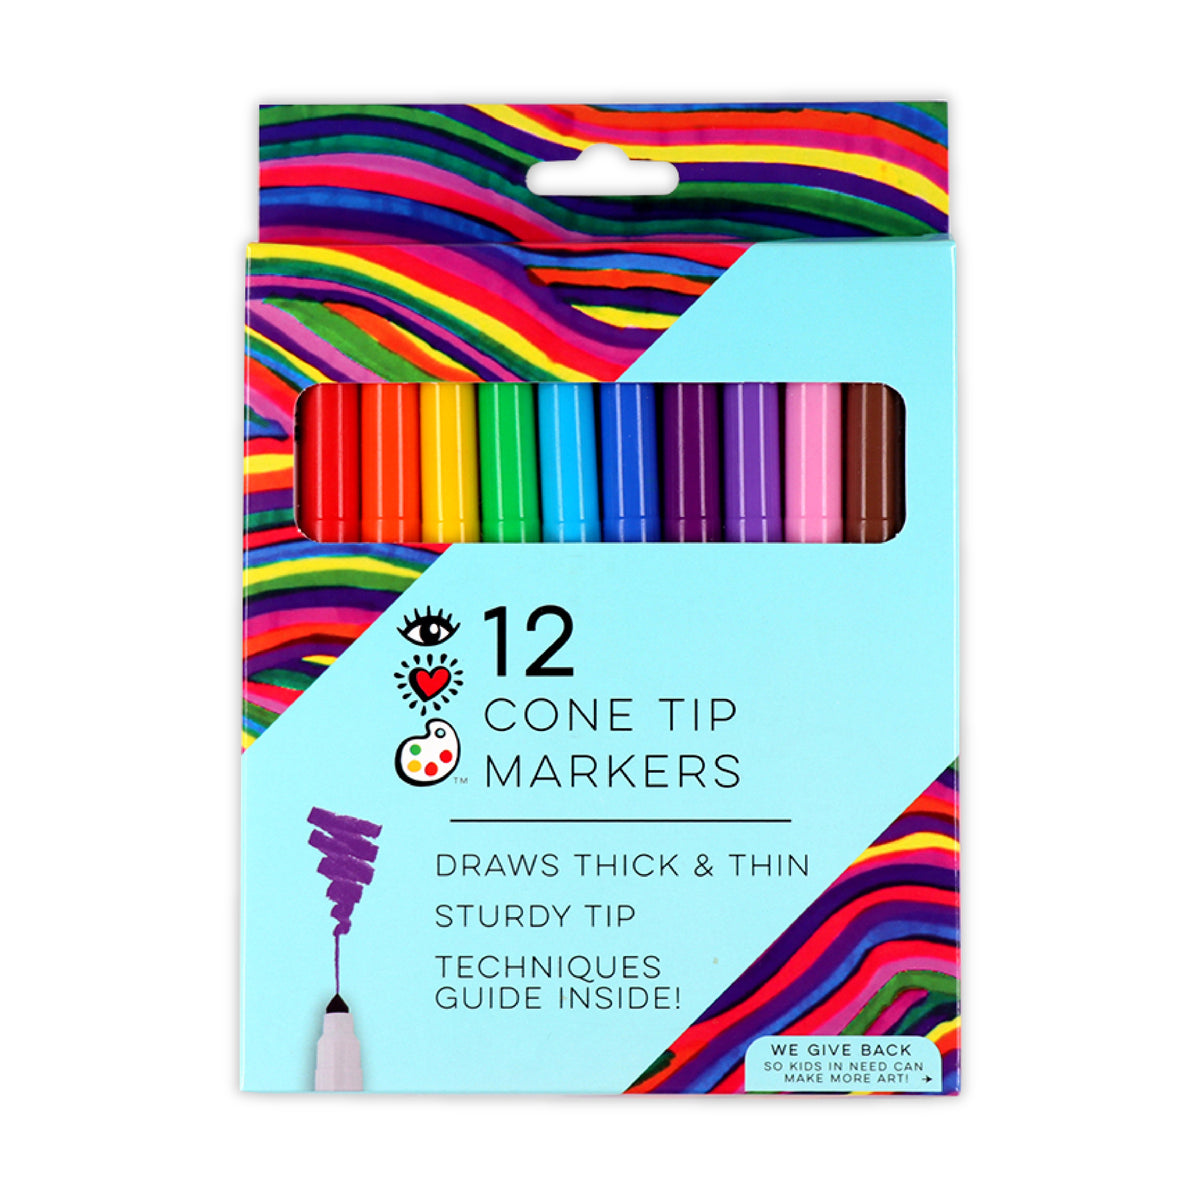 Bright Stripes 12 Brush & Fine Tip Markers